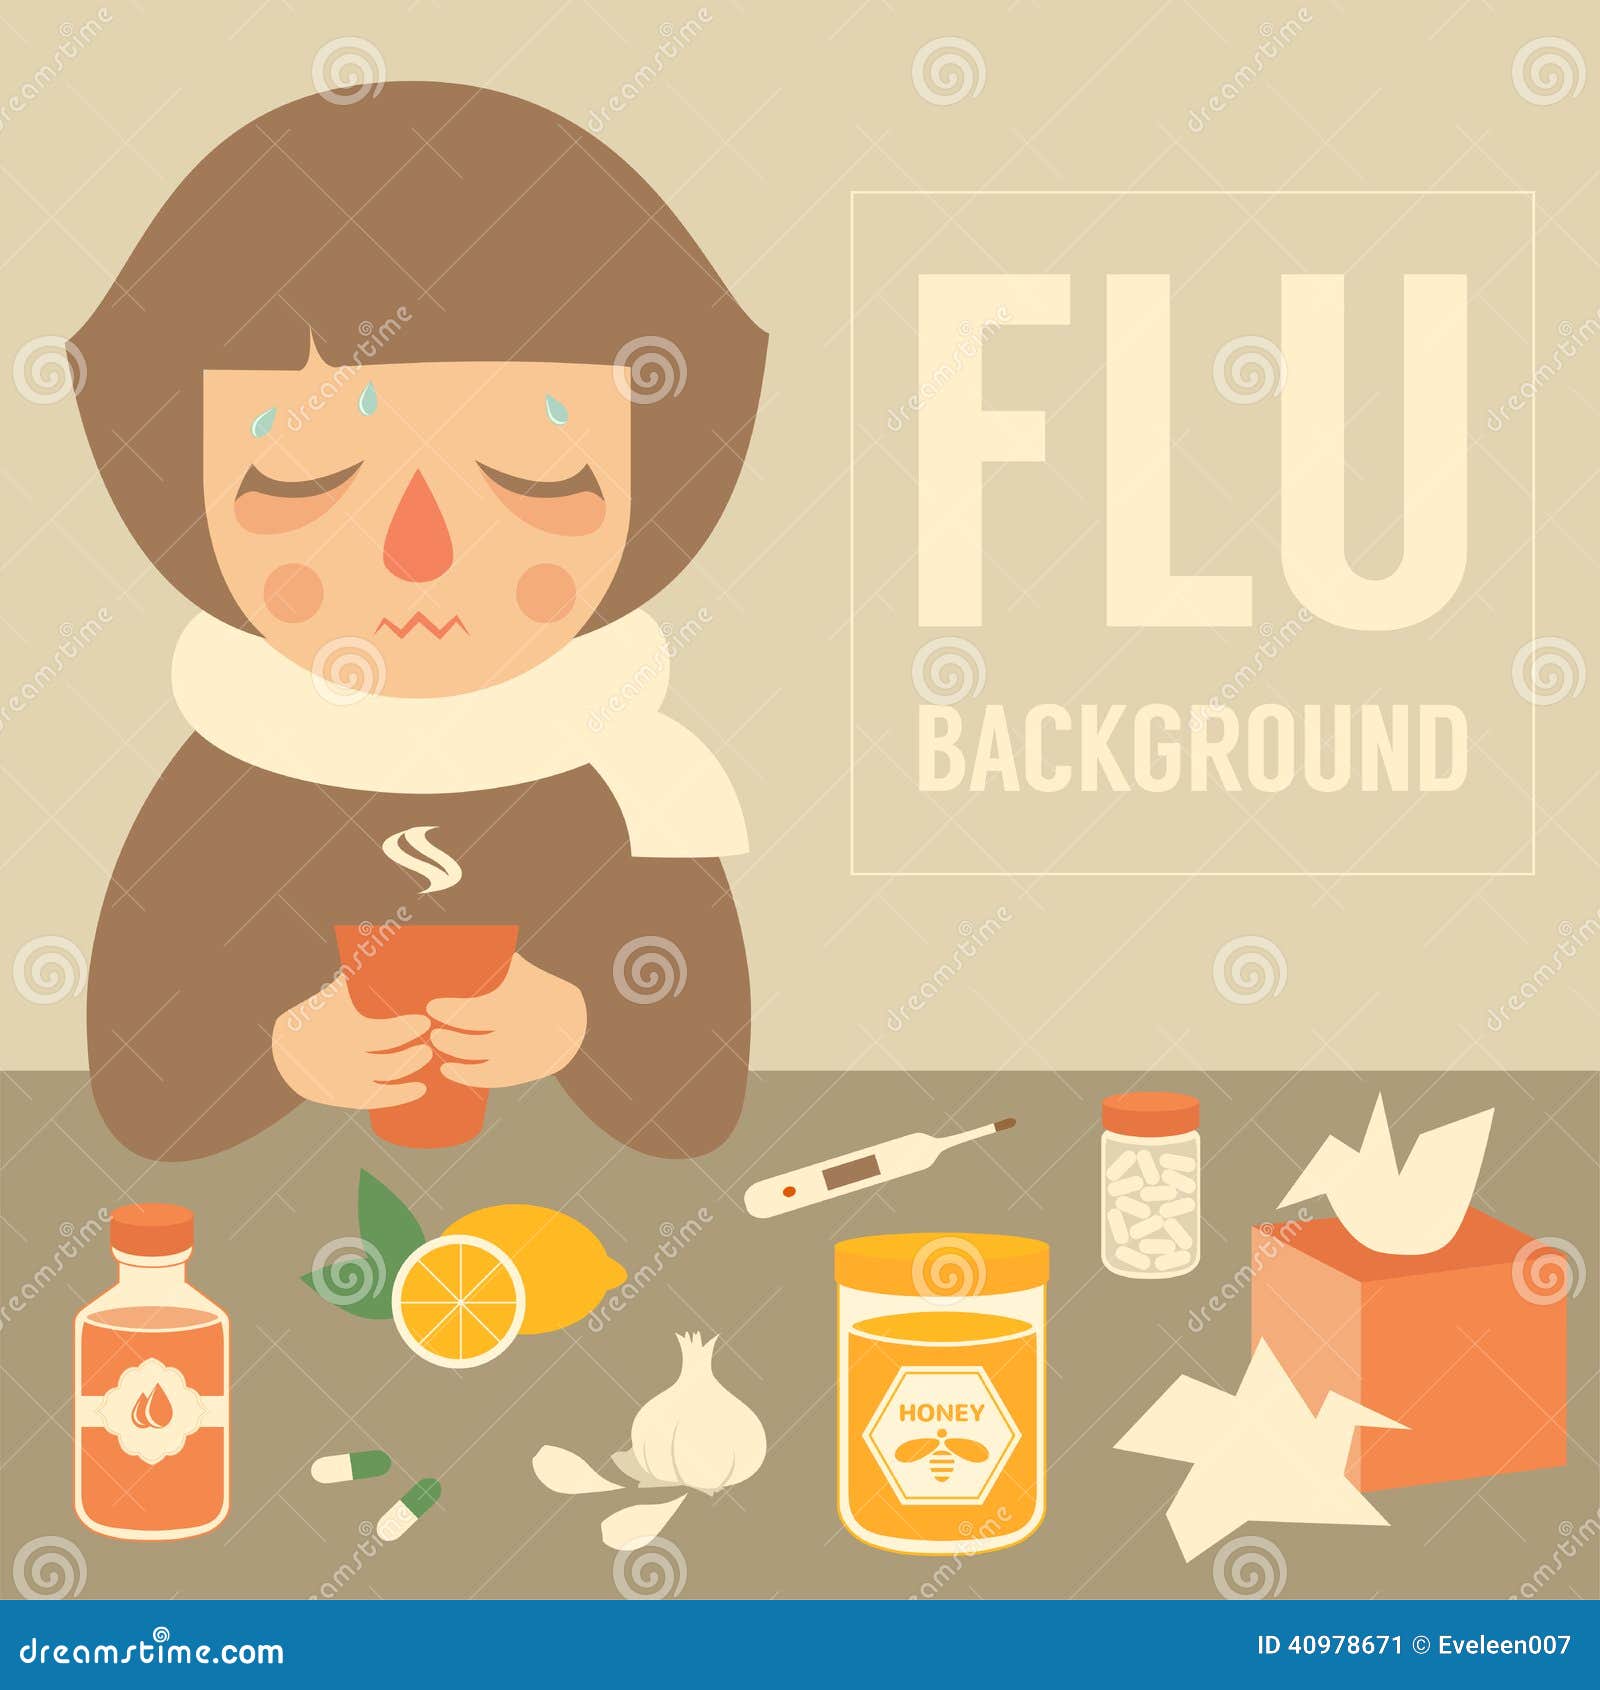 flu symptom